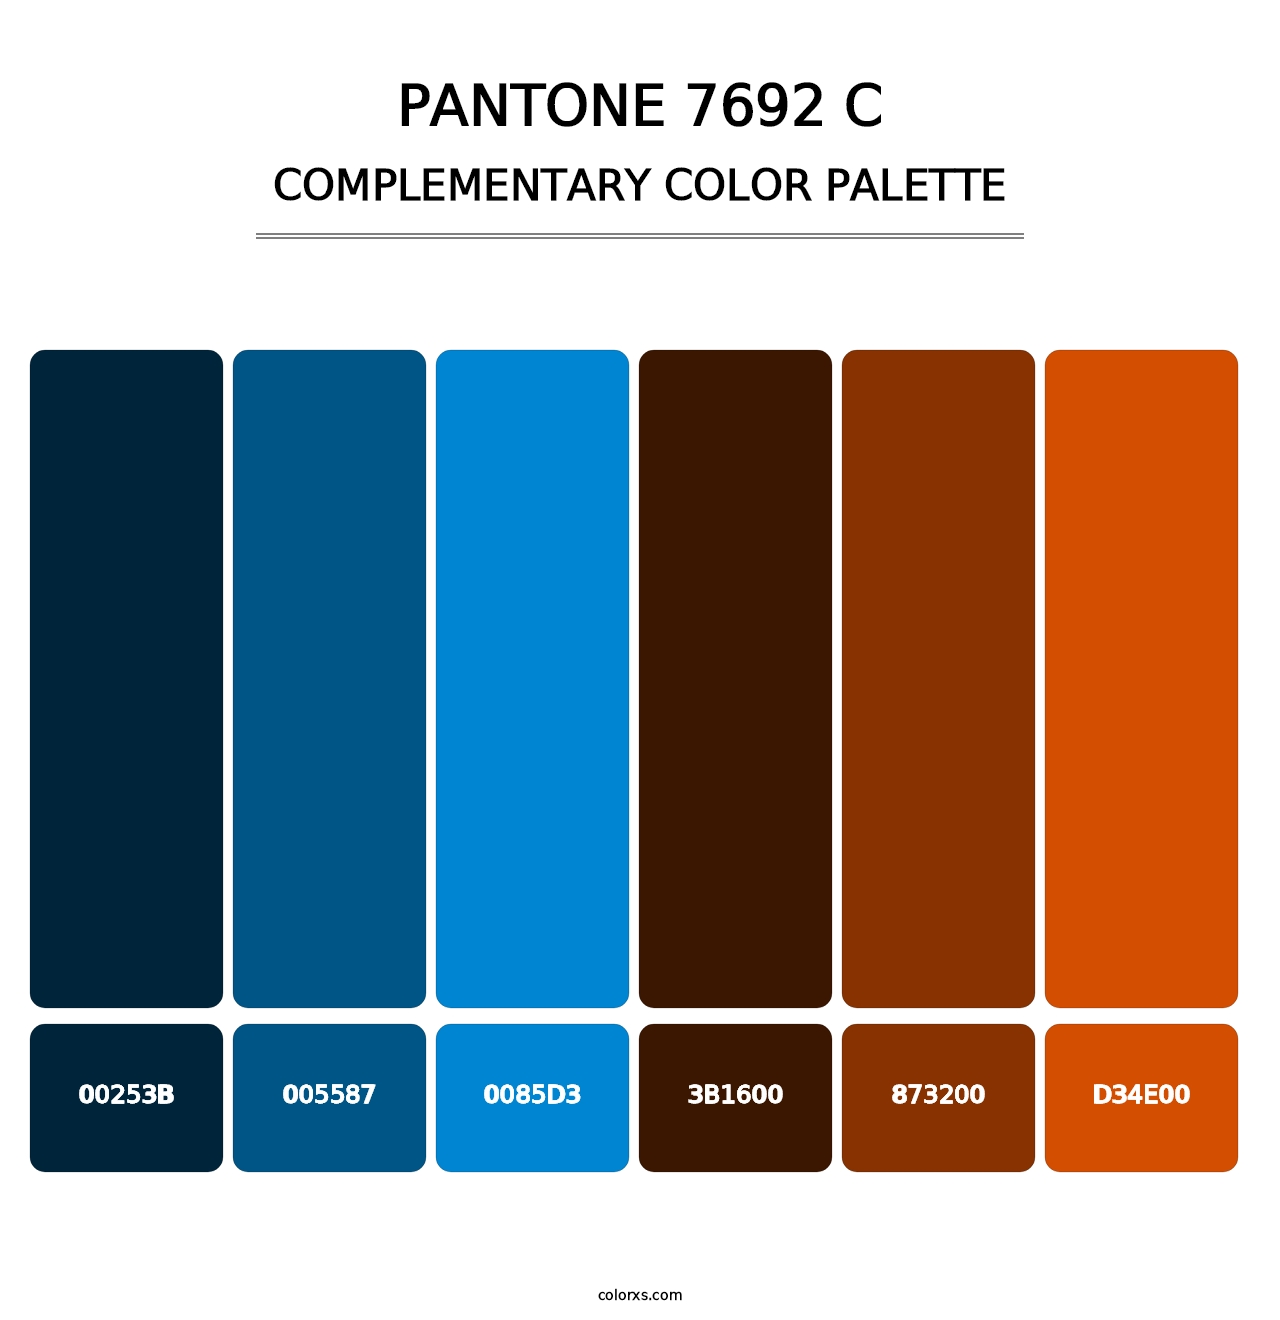 PANTONE 7692 C - Complementary Color Palette